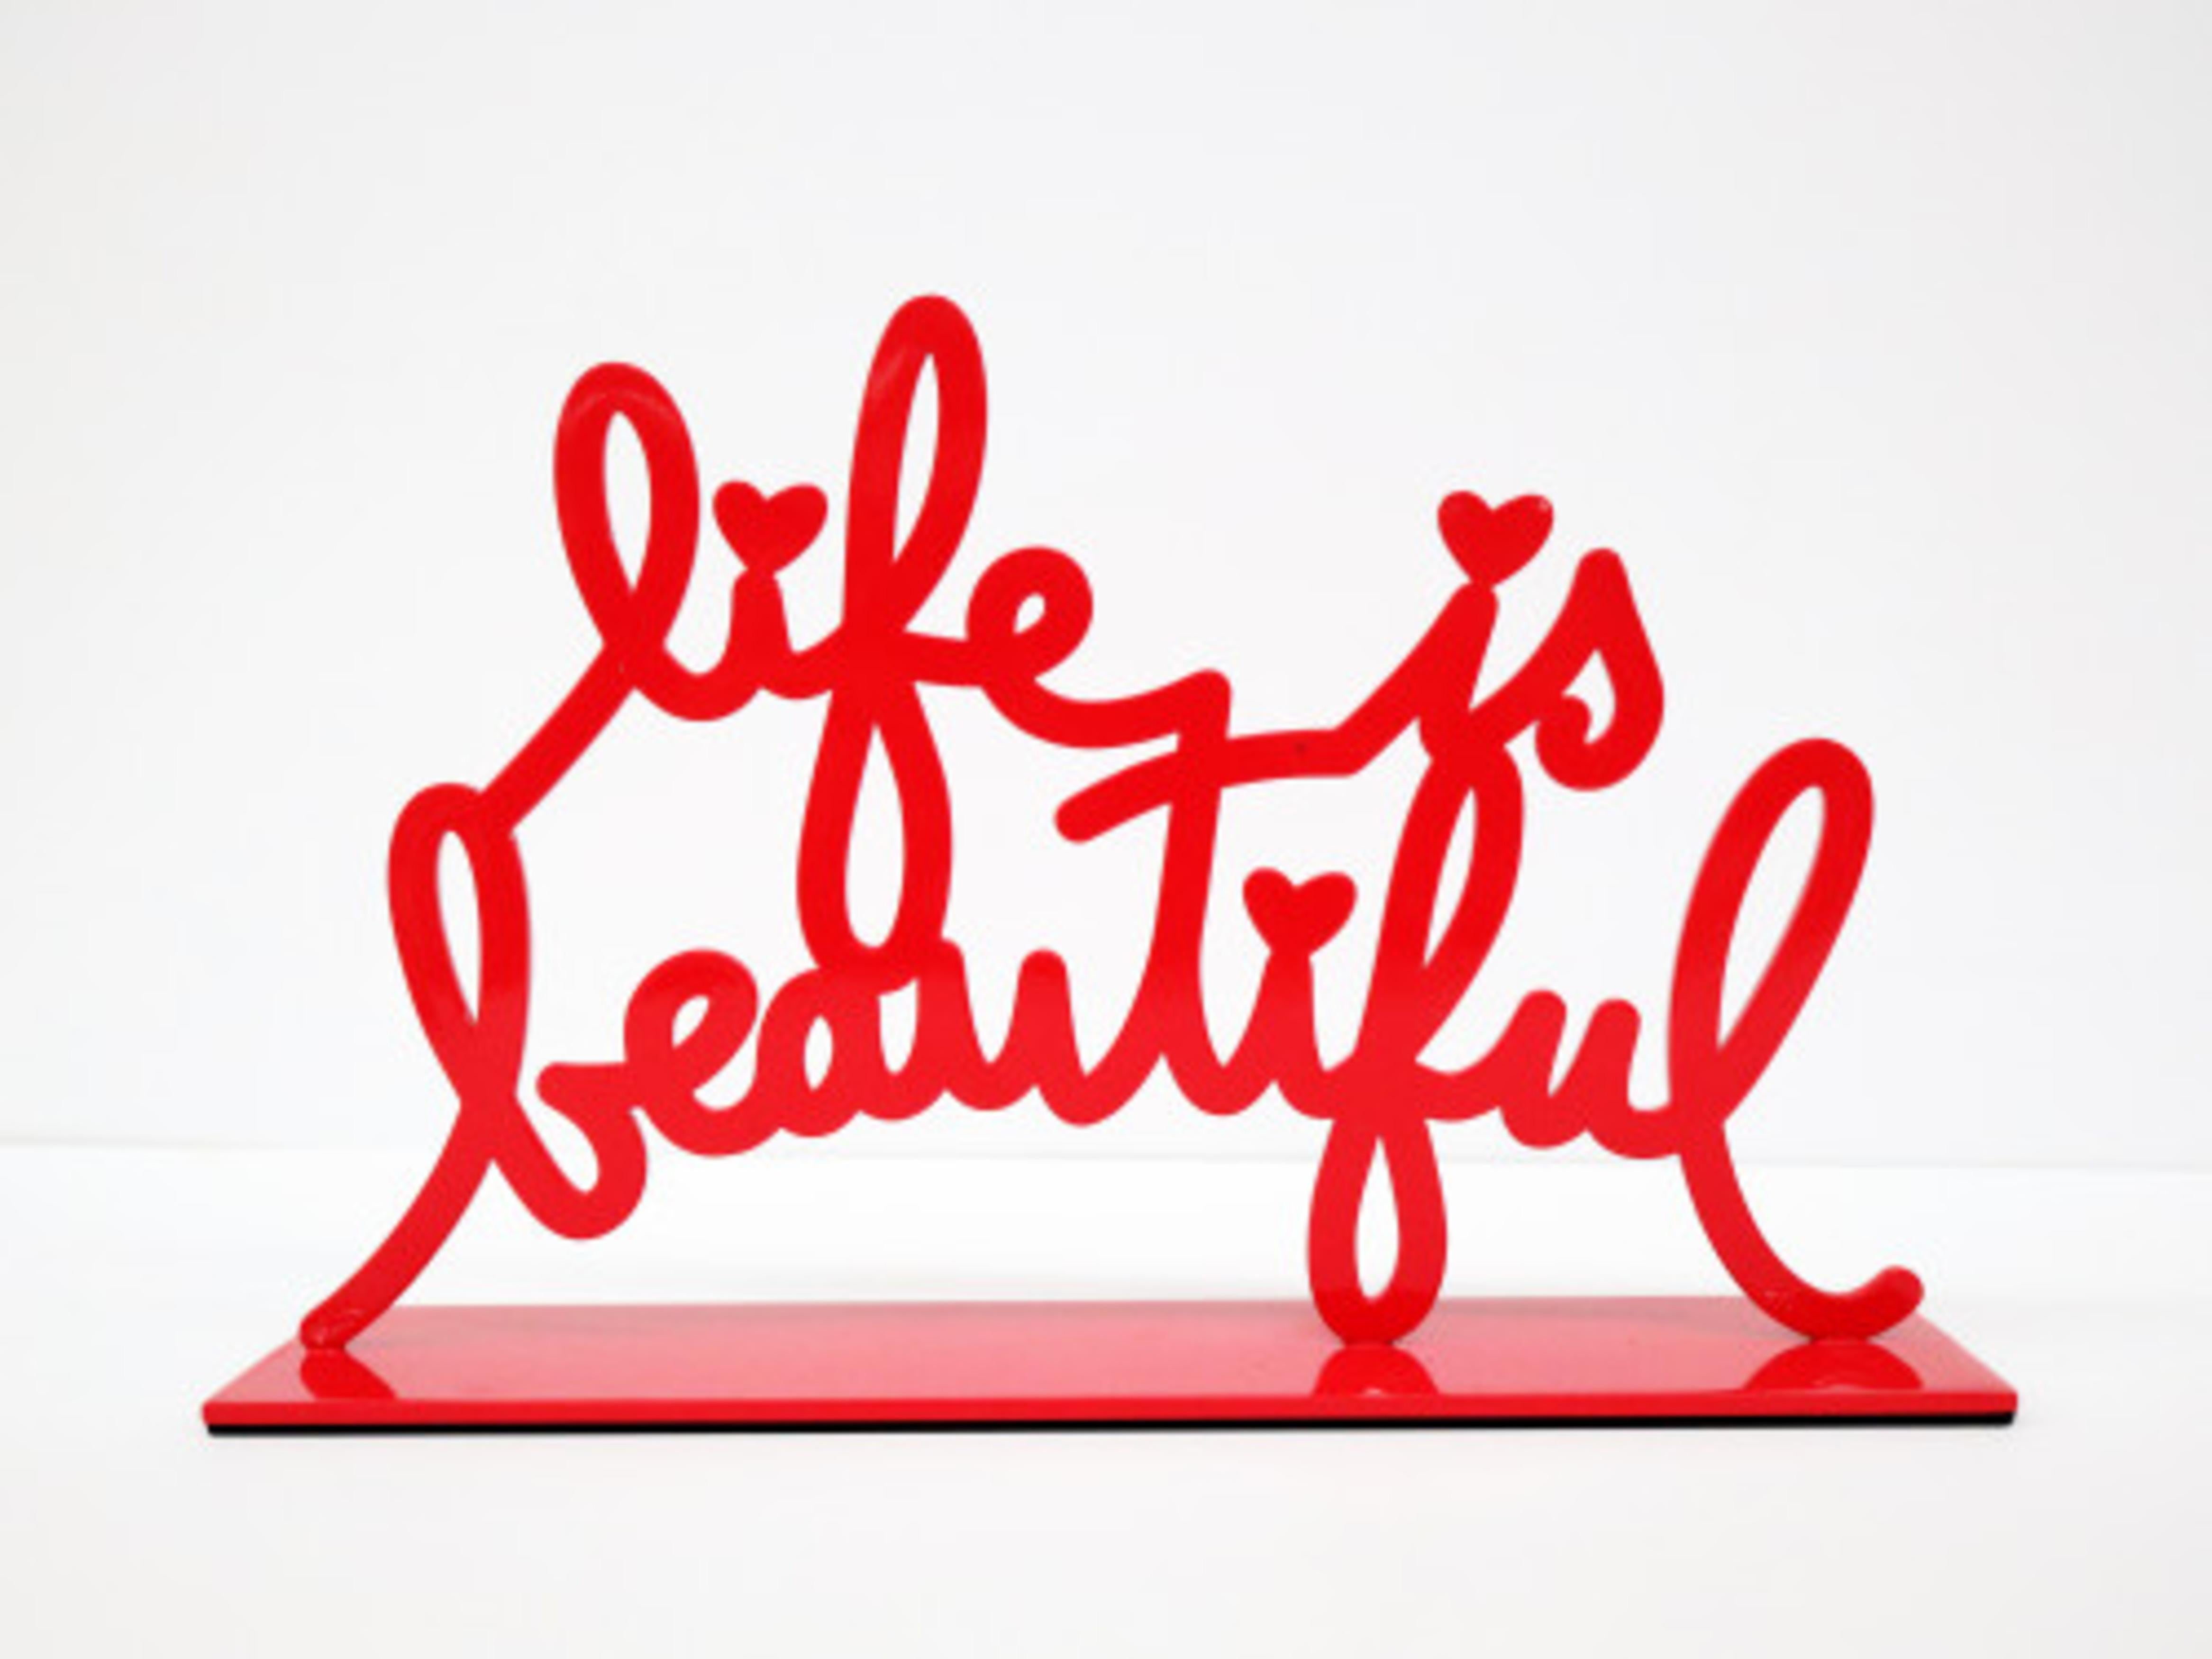 Life is Beautiful III (RED) - Sculpture by Mr. Brainwash